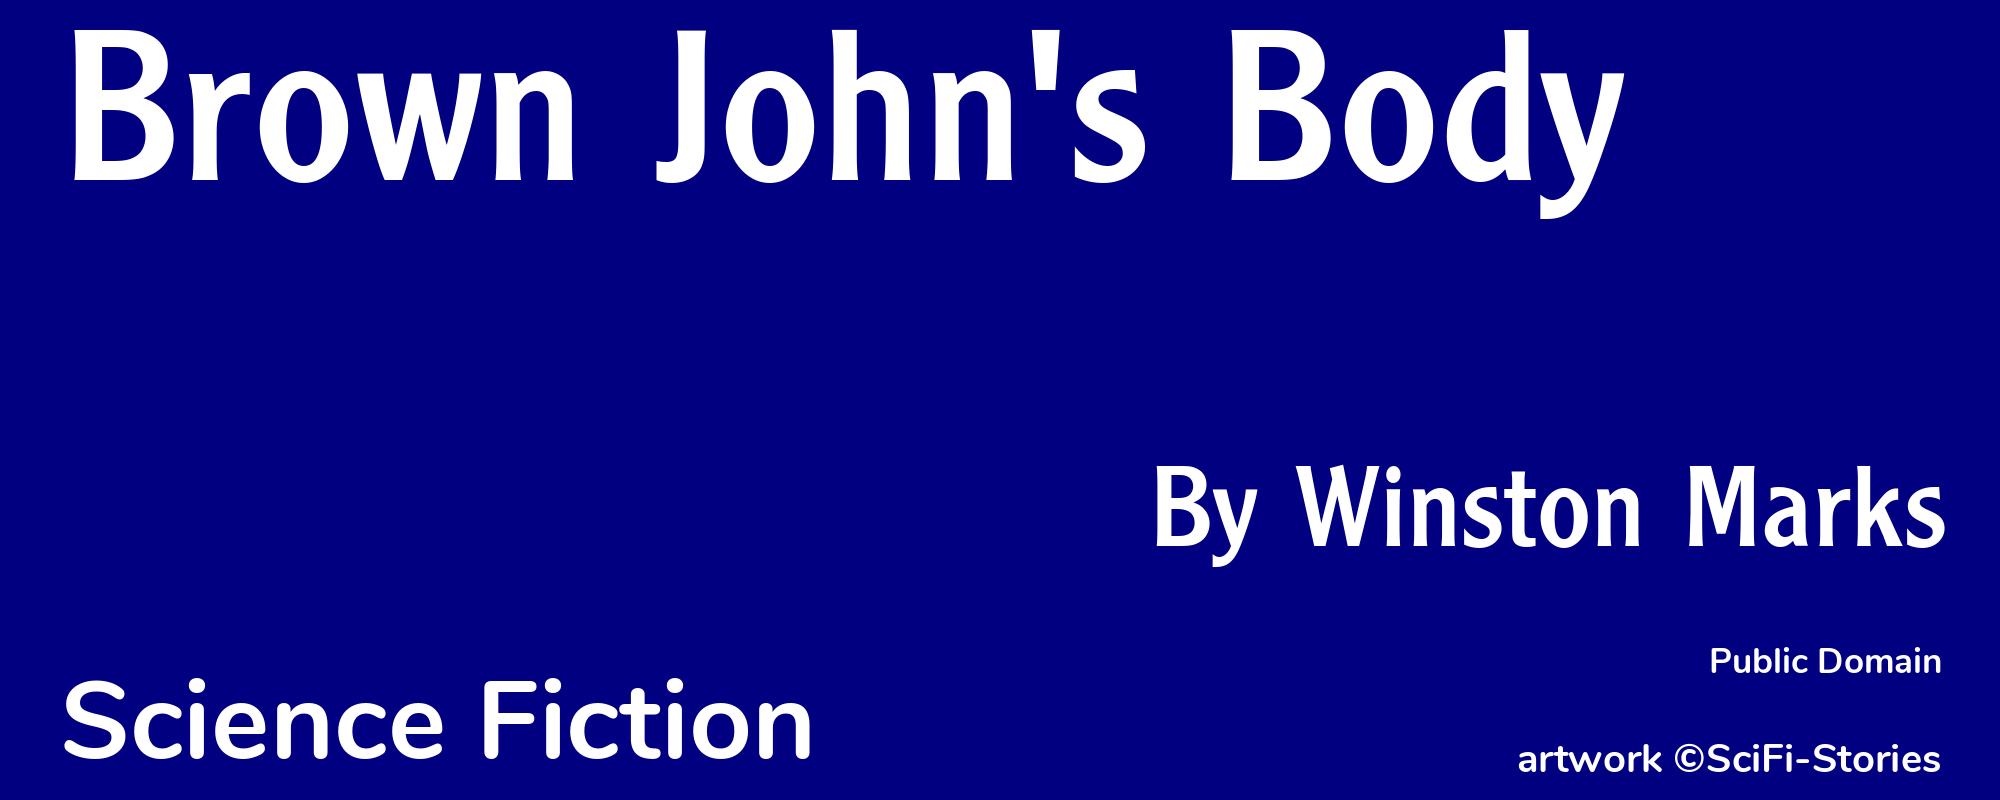 Brown John's Body - Cover